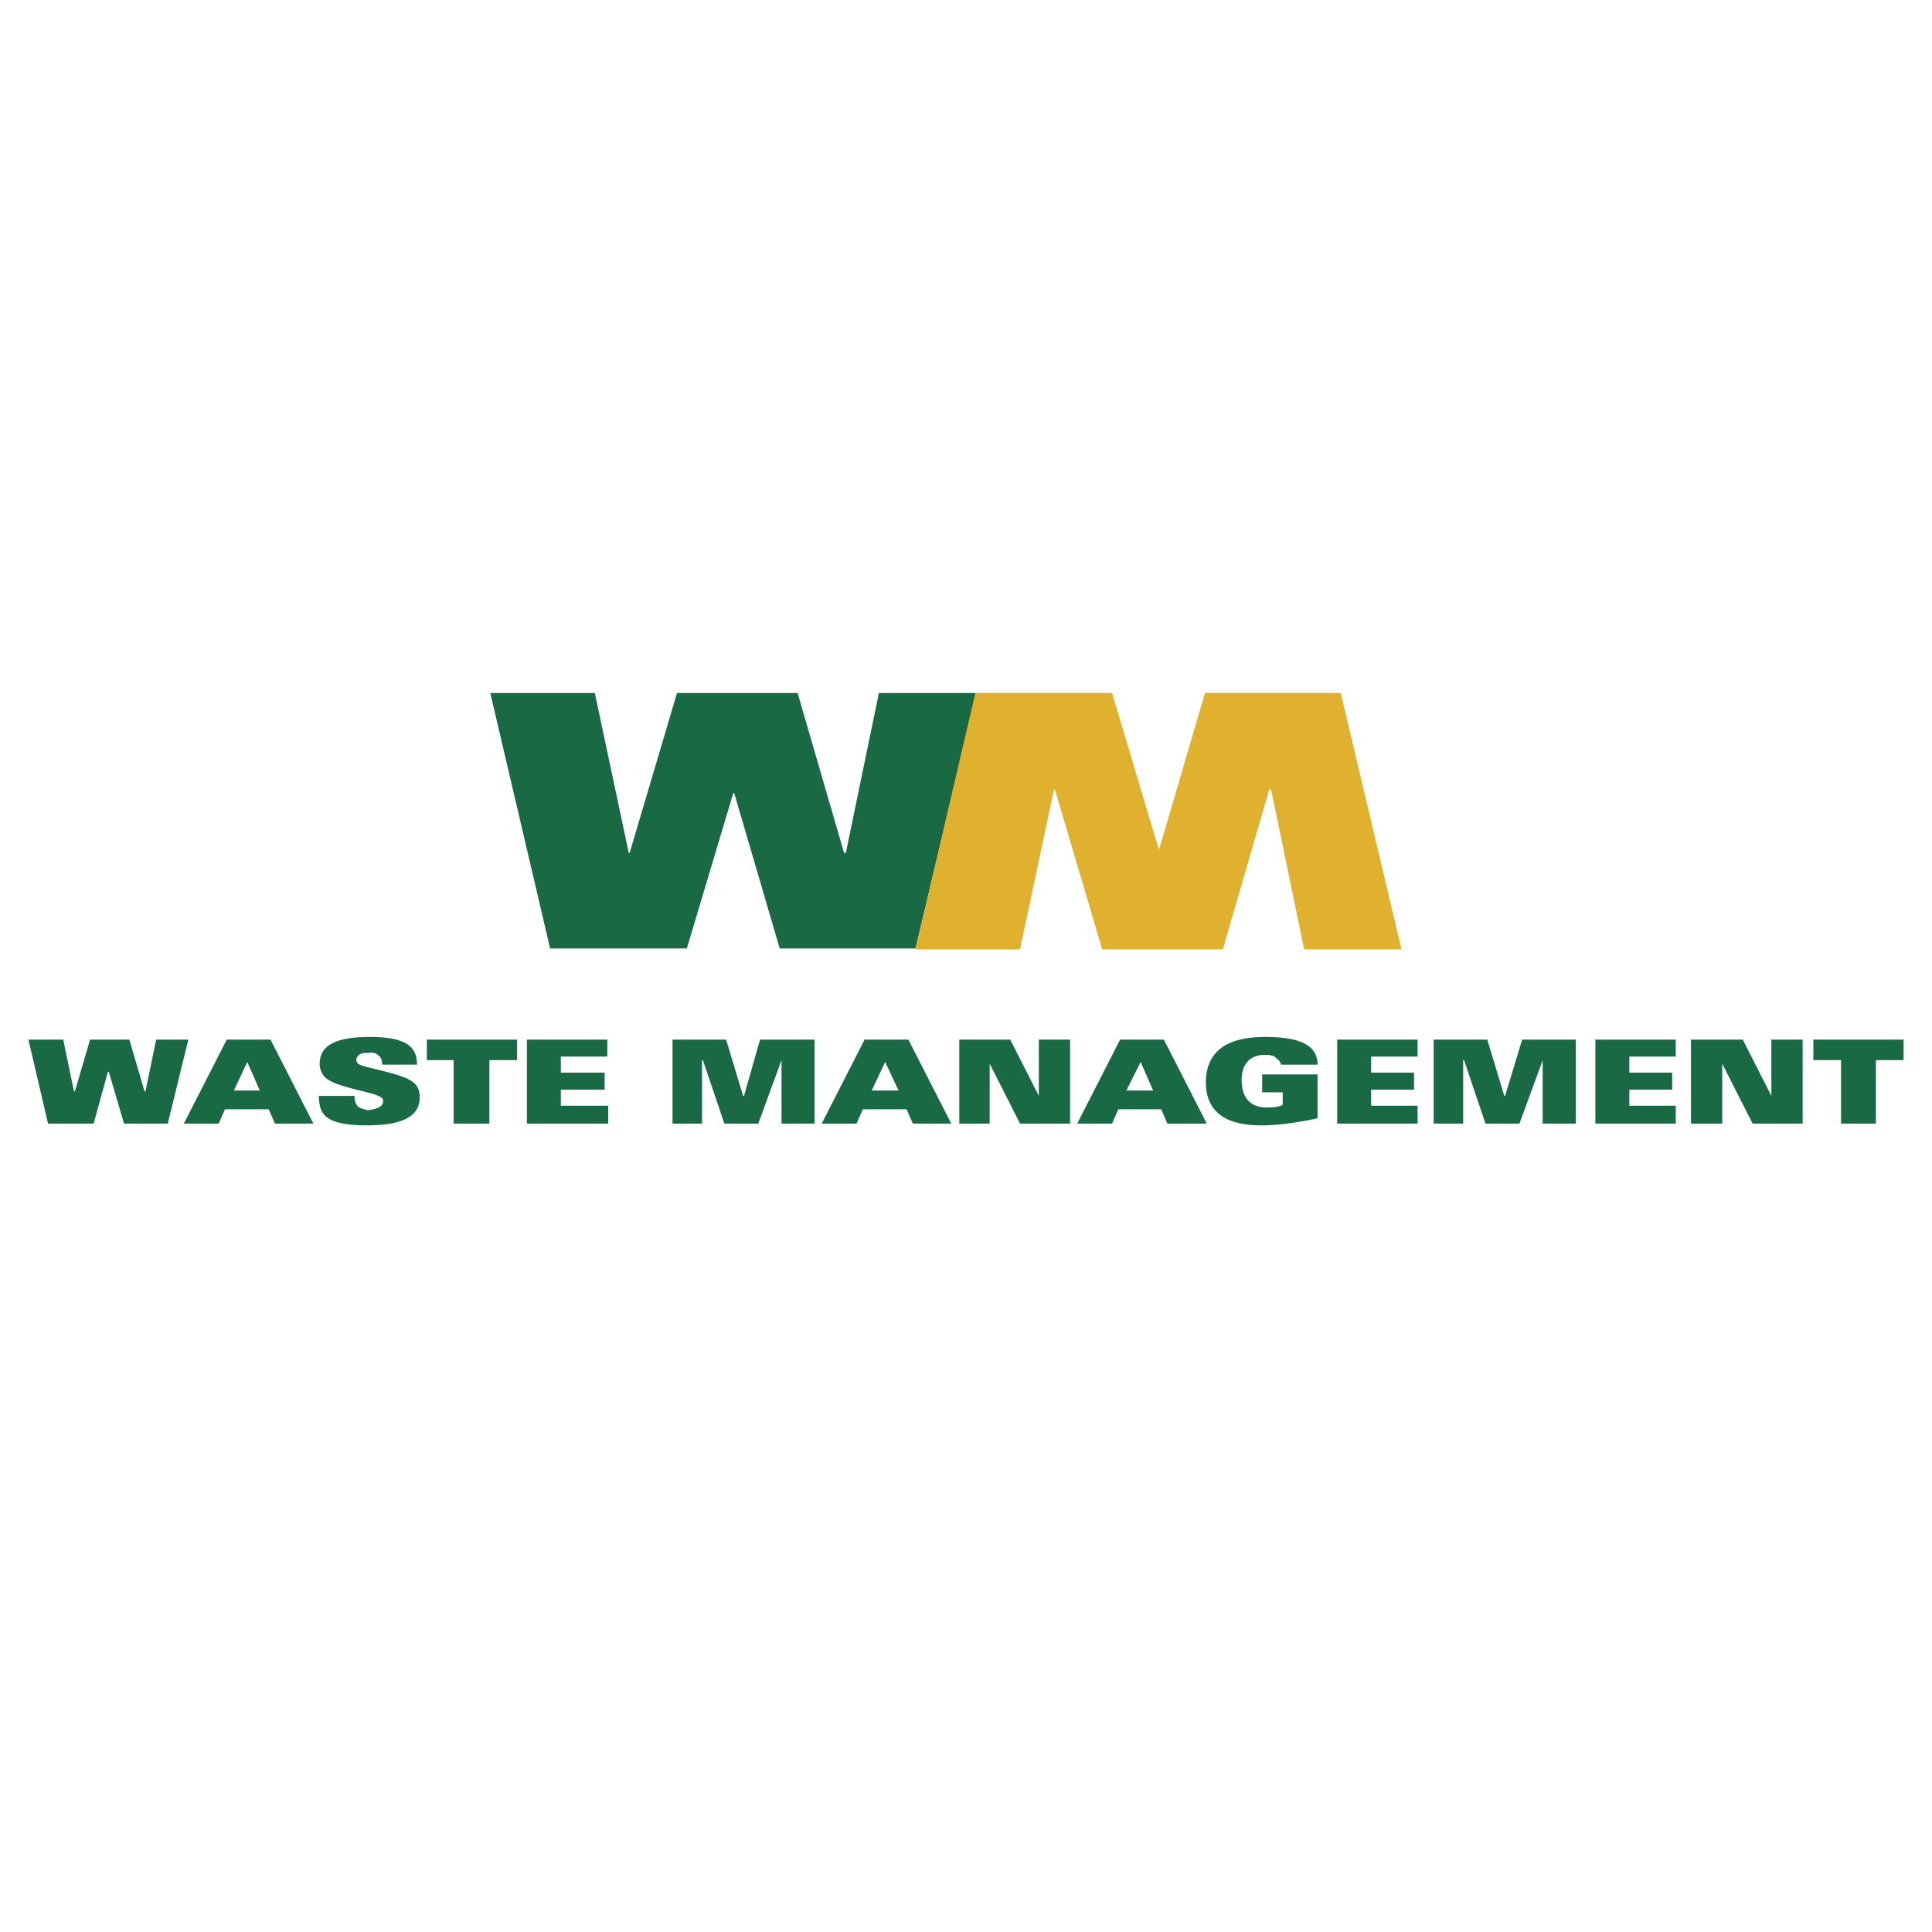 Waste Management logo colors